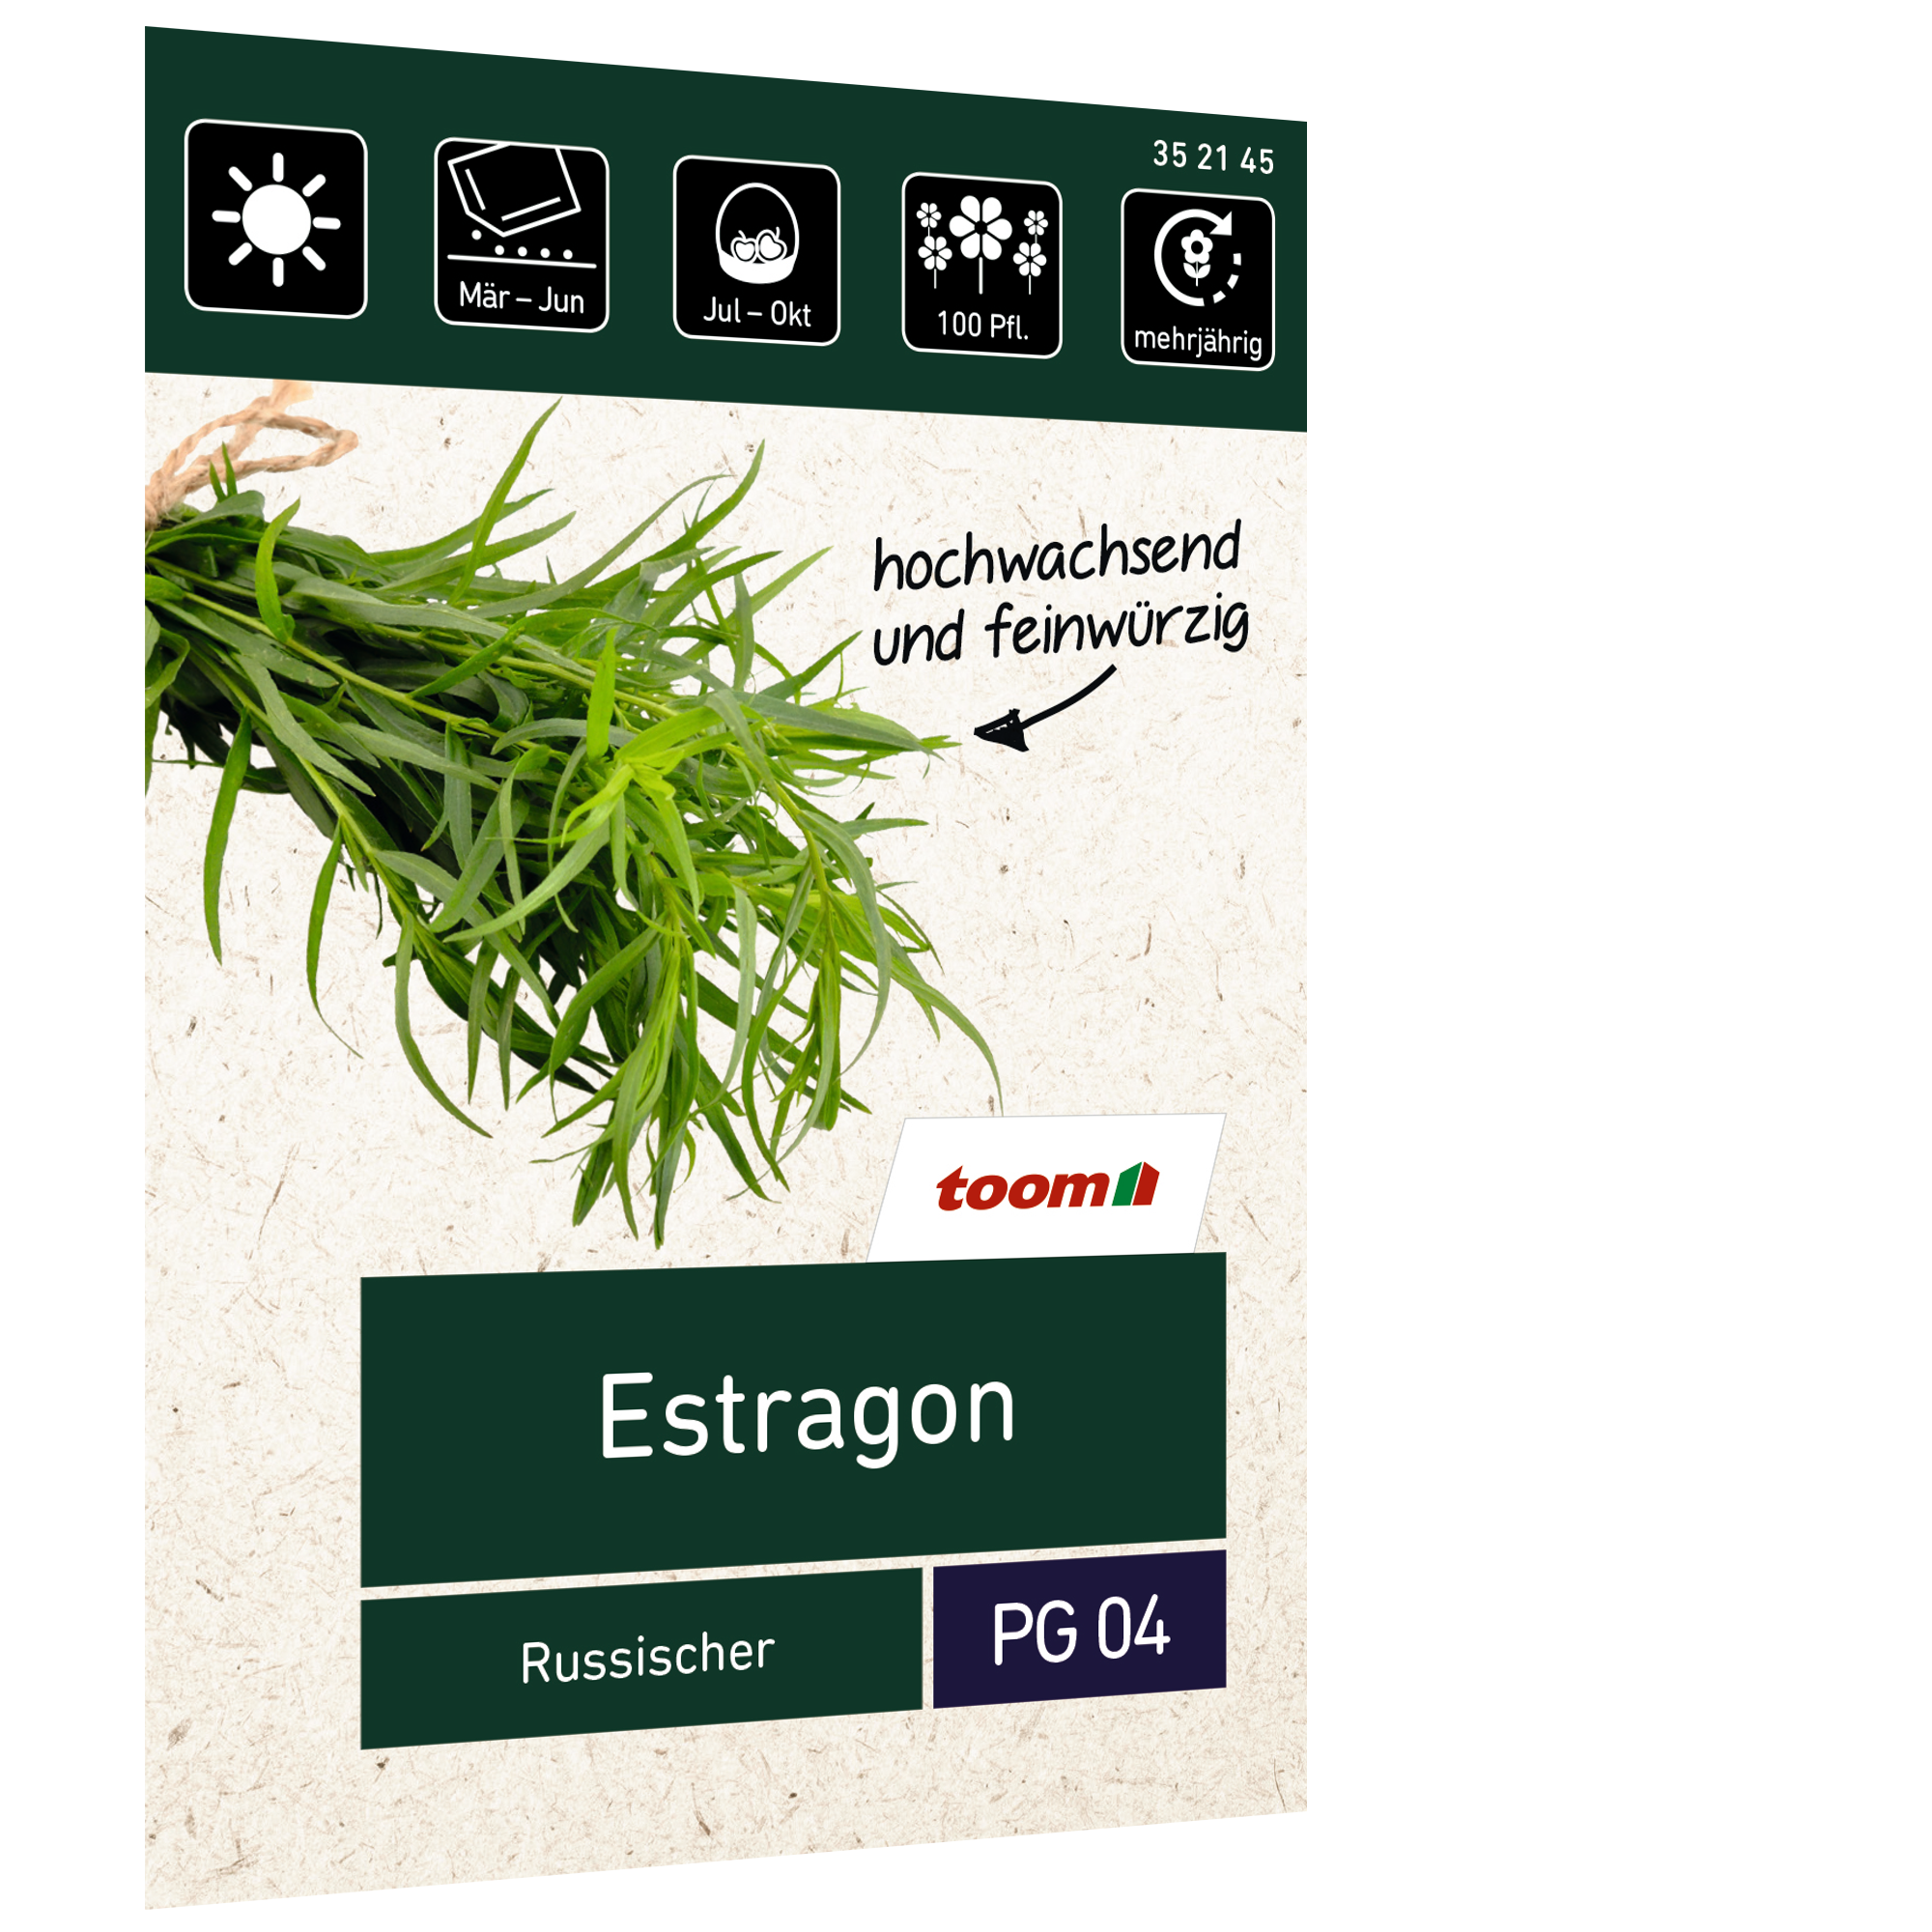 Estragon 'Russischer' + product picture